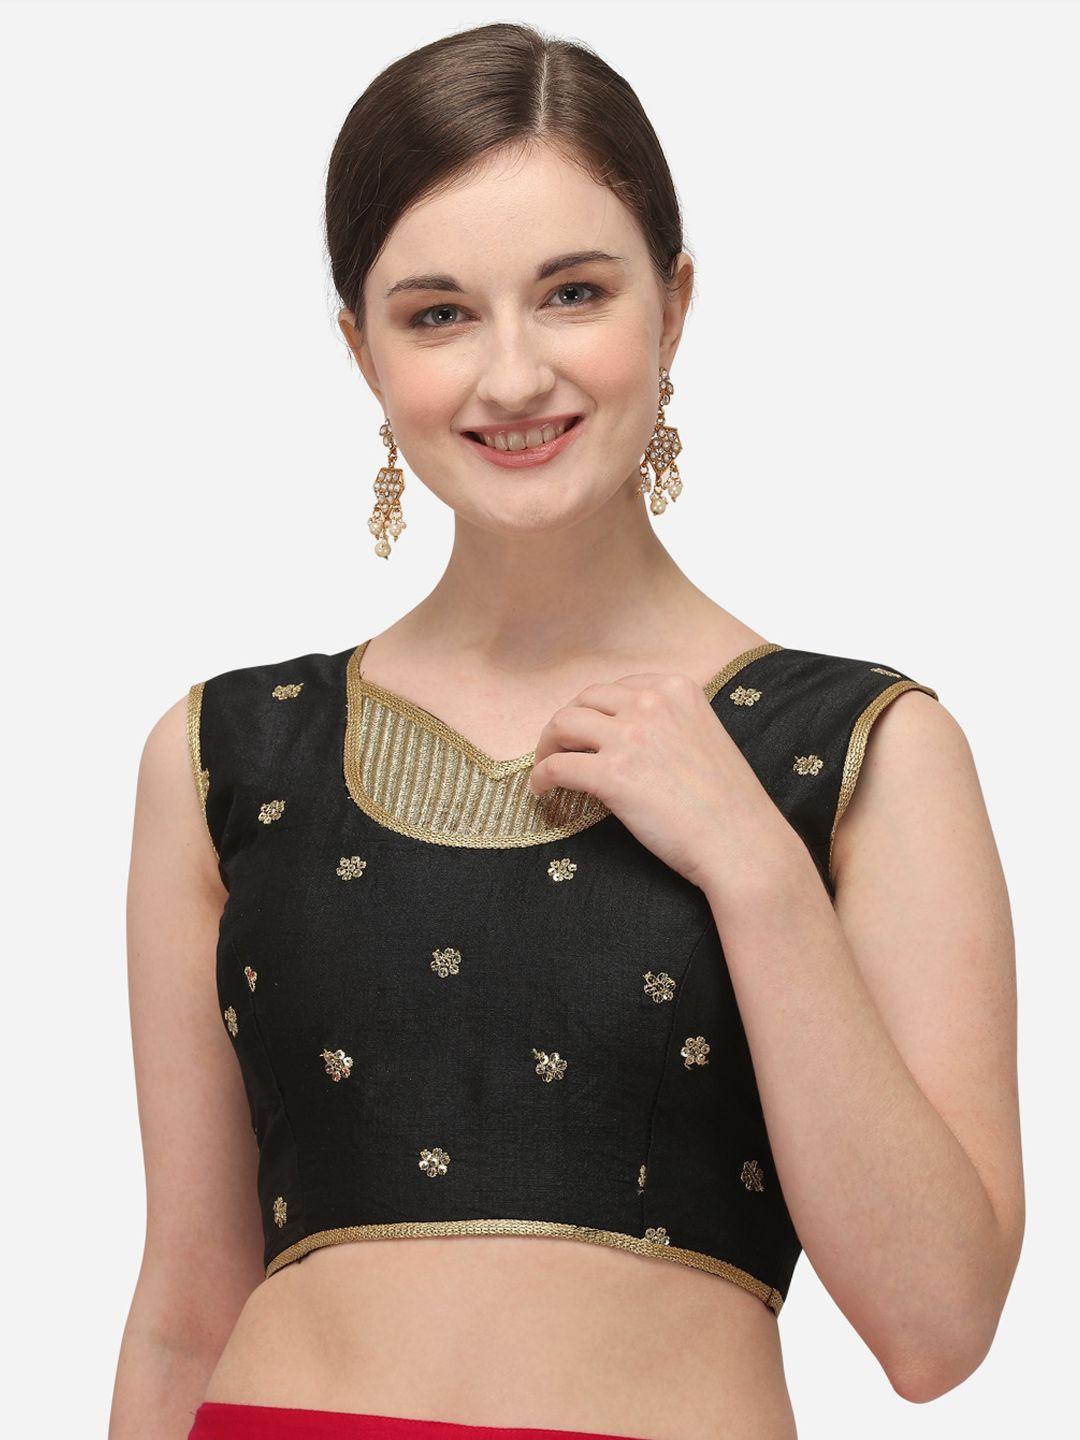 fab dadu embroidered saree blouse